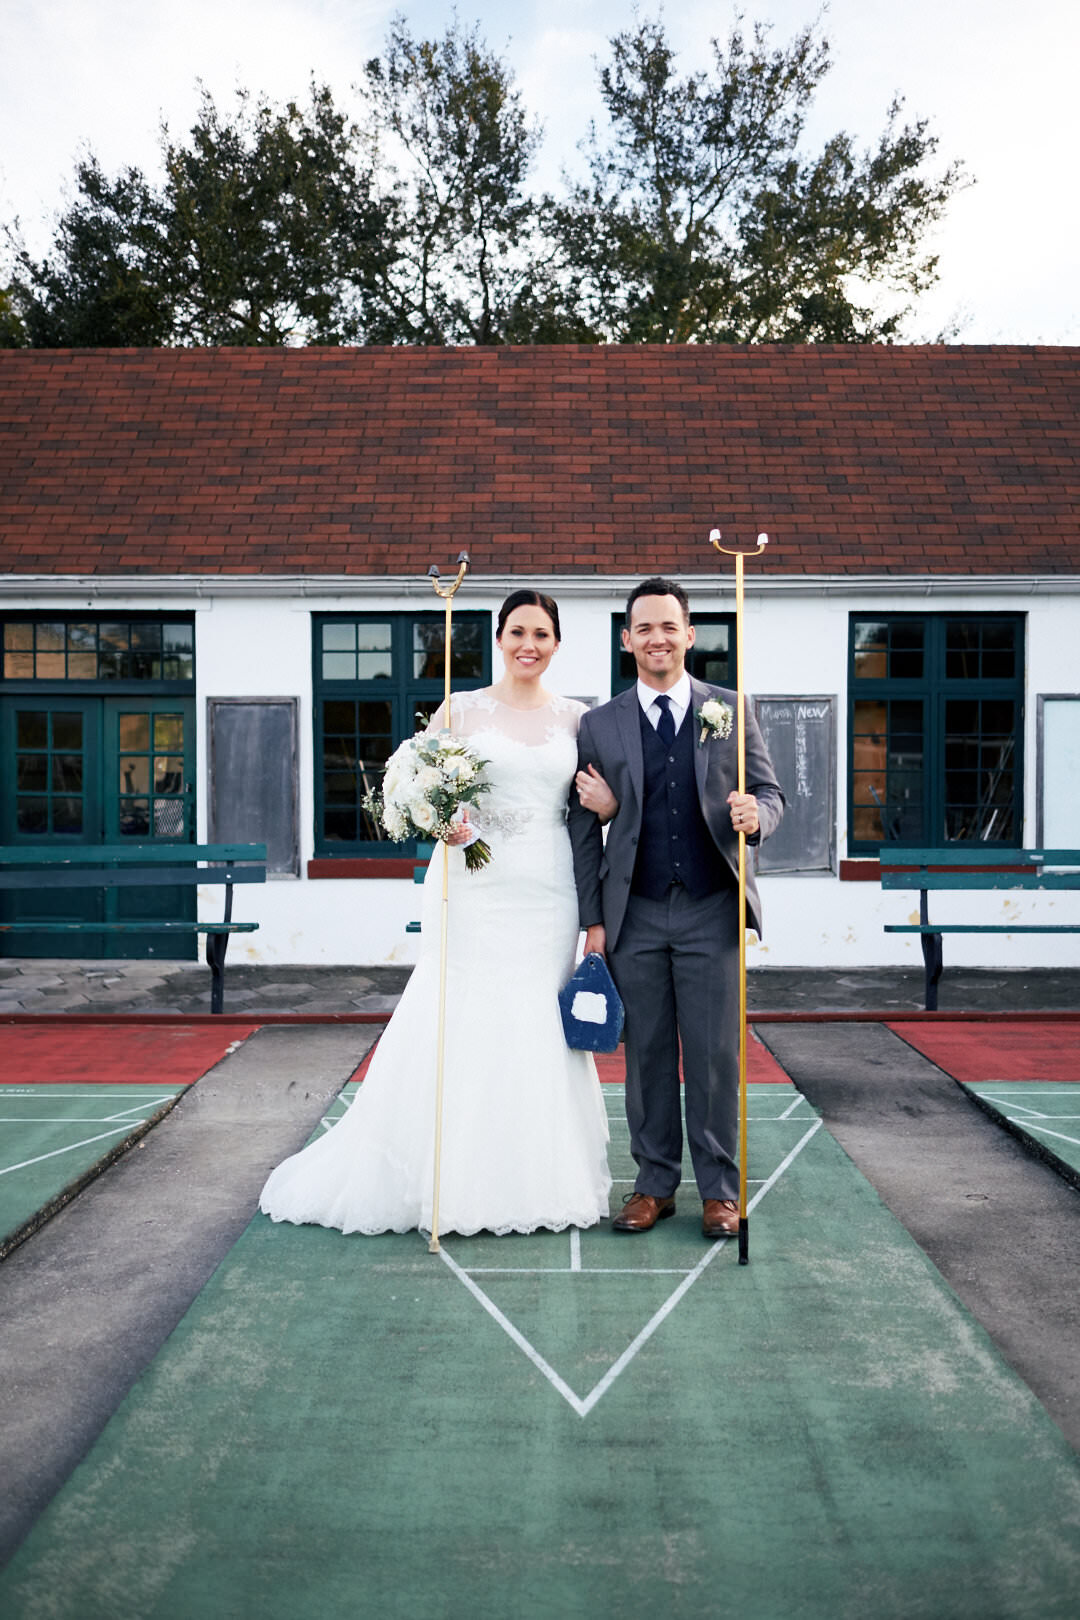 married shuffleboard partners